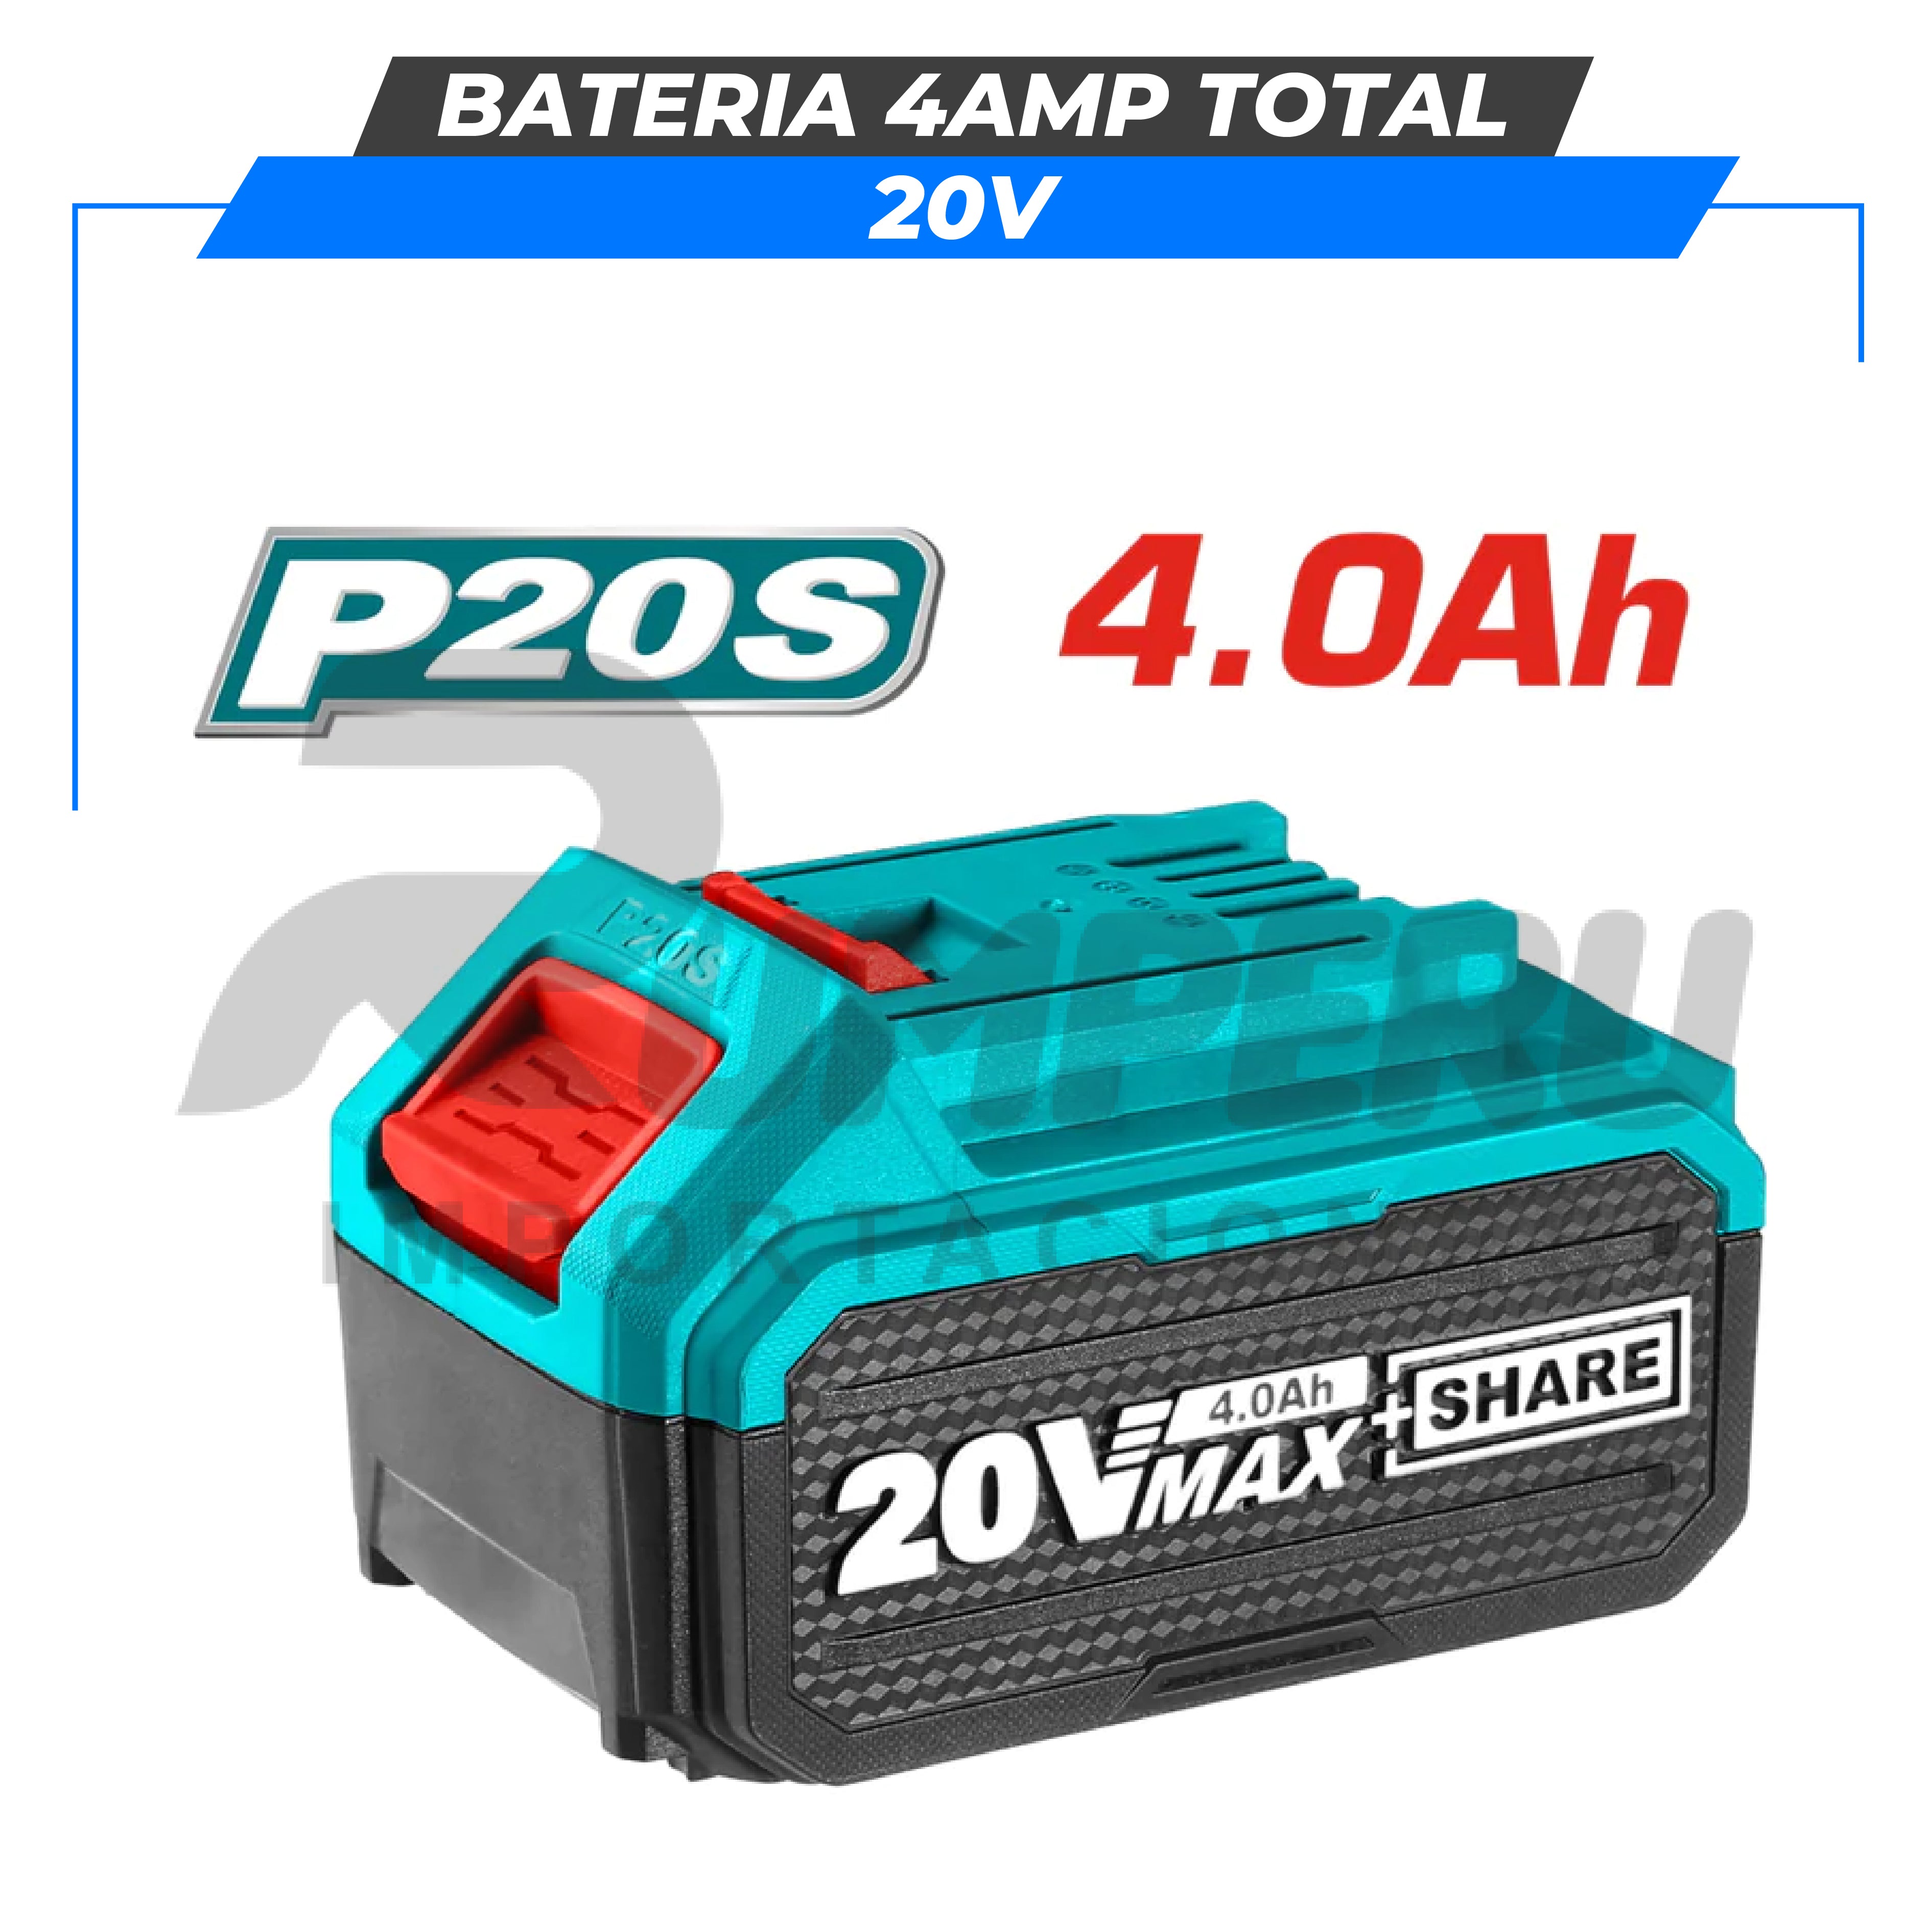 Bateria 20v 4 amp TOTAL